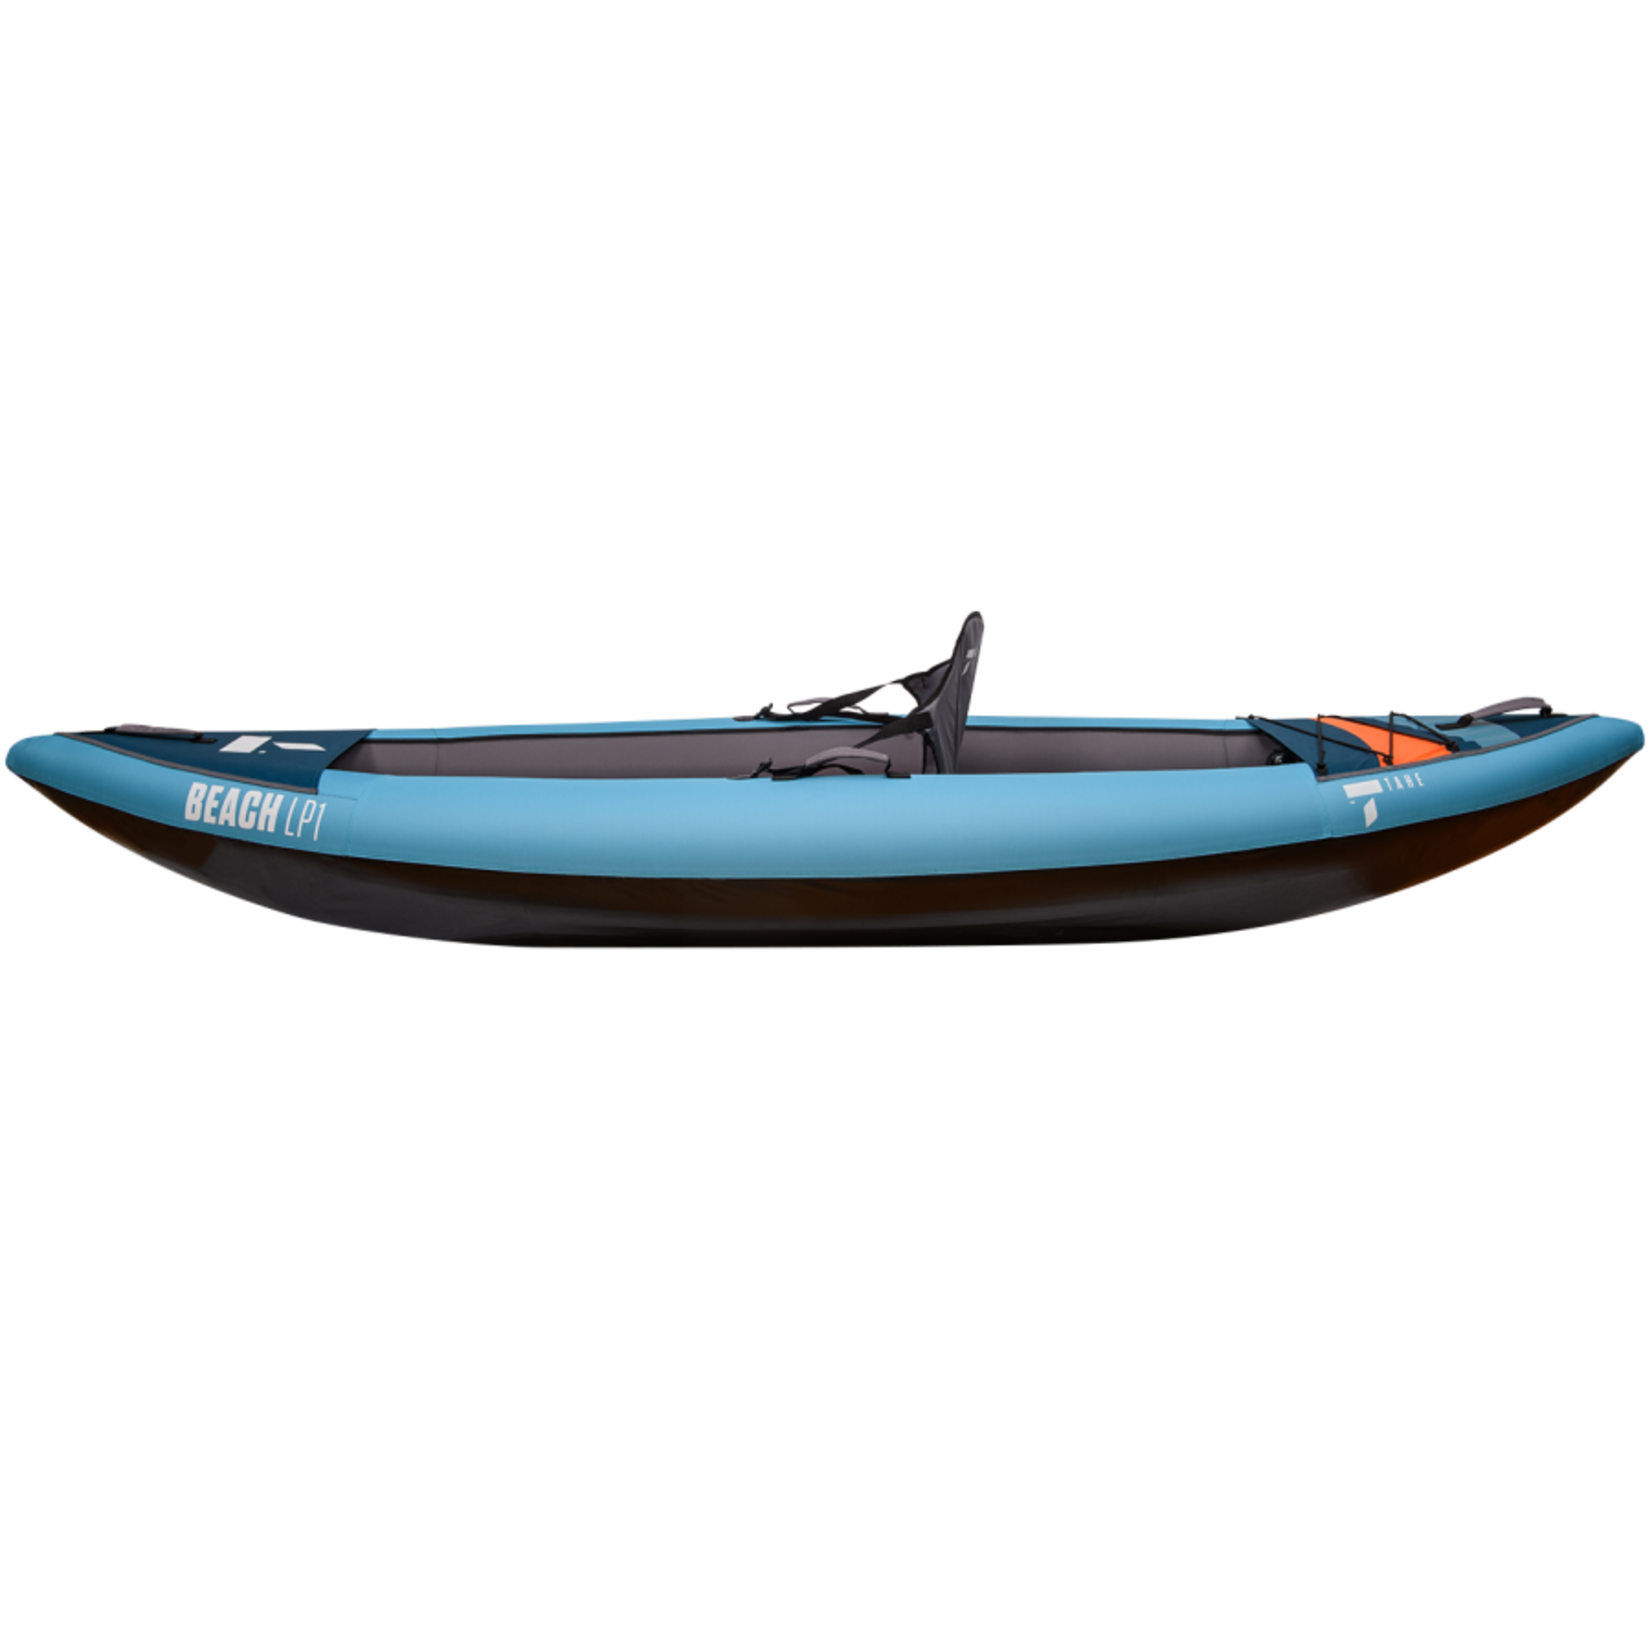 Tahe Beach Lp1 Inflatable Kayak